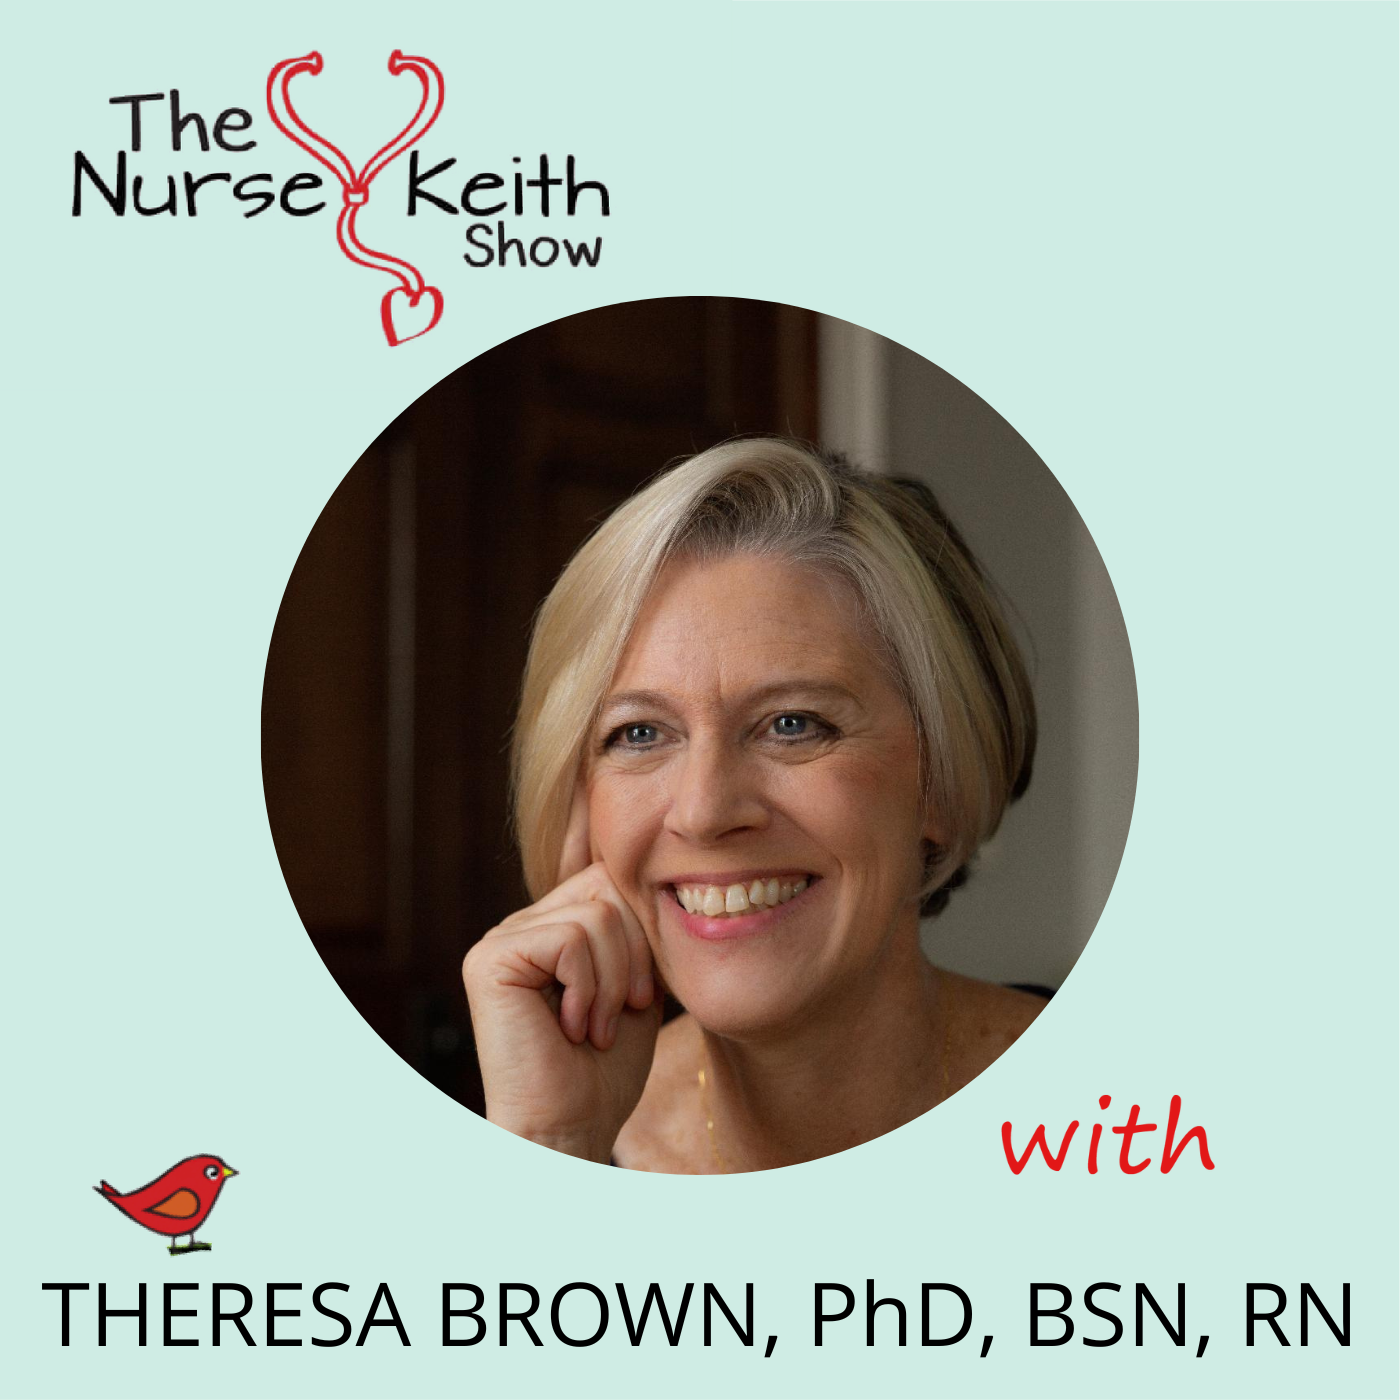 Theresa Brown, PhD, BSN, RN